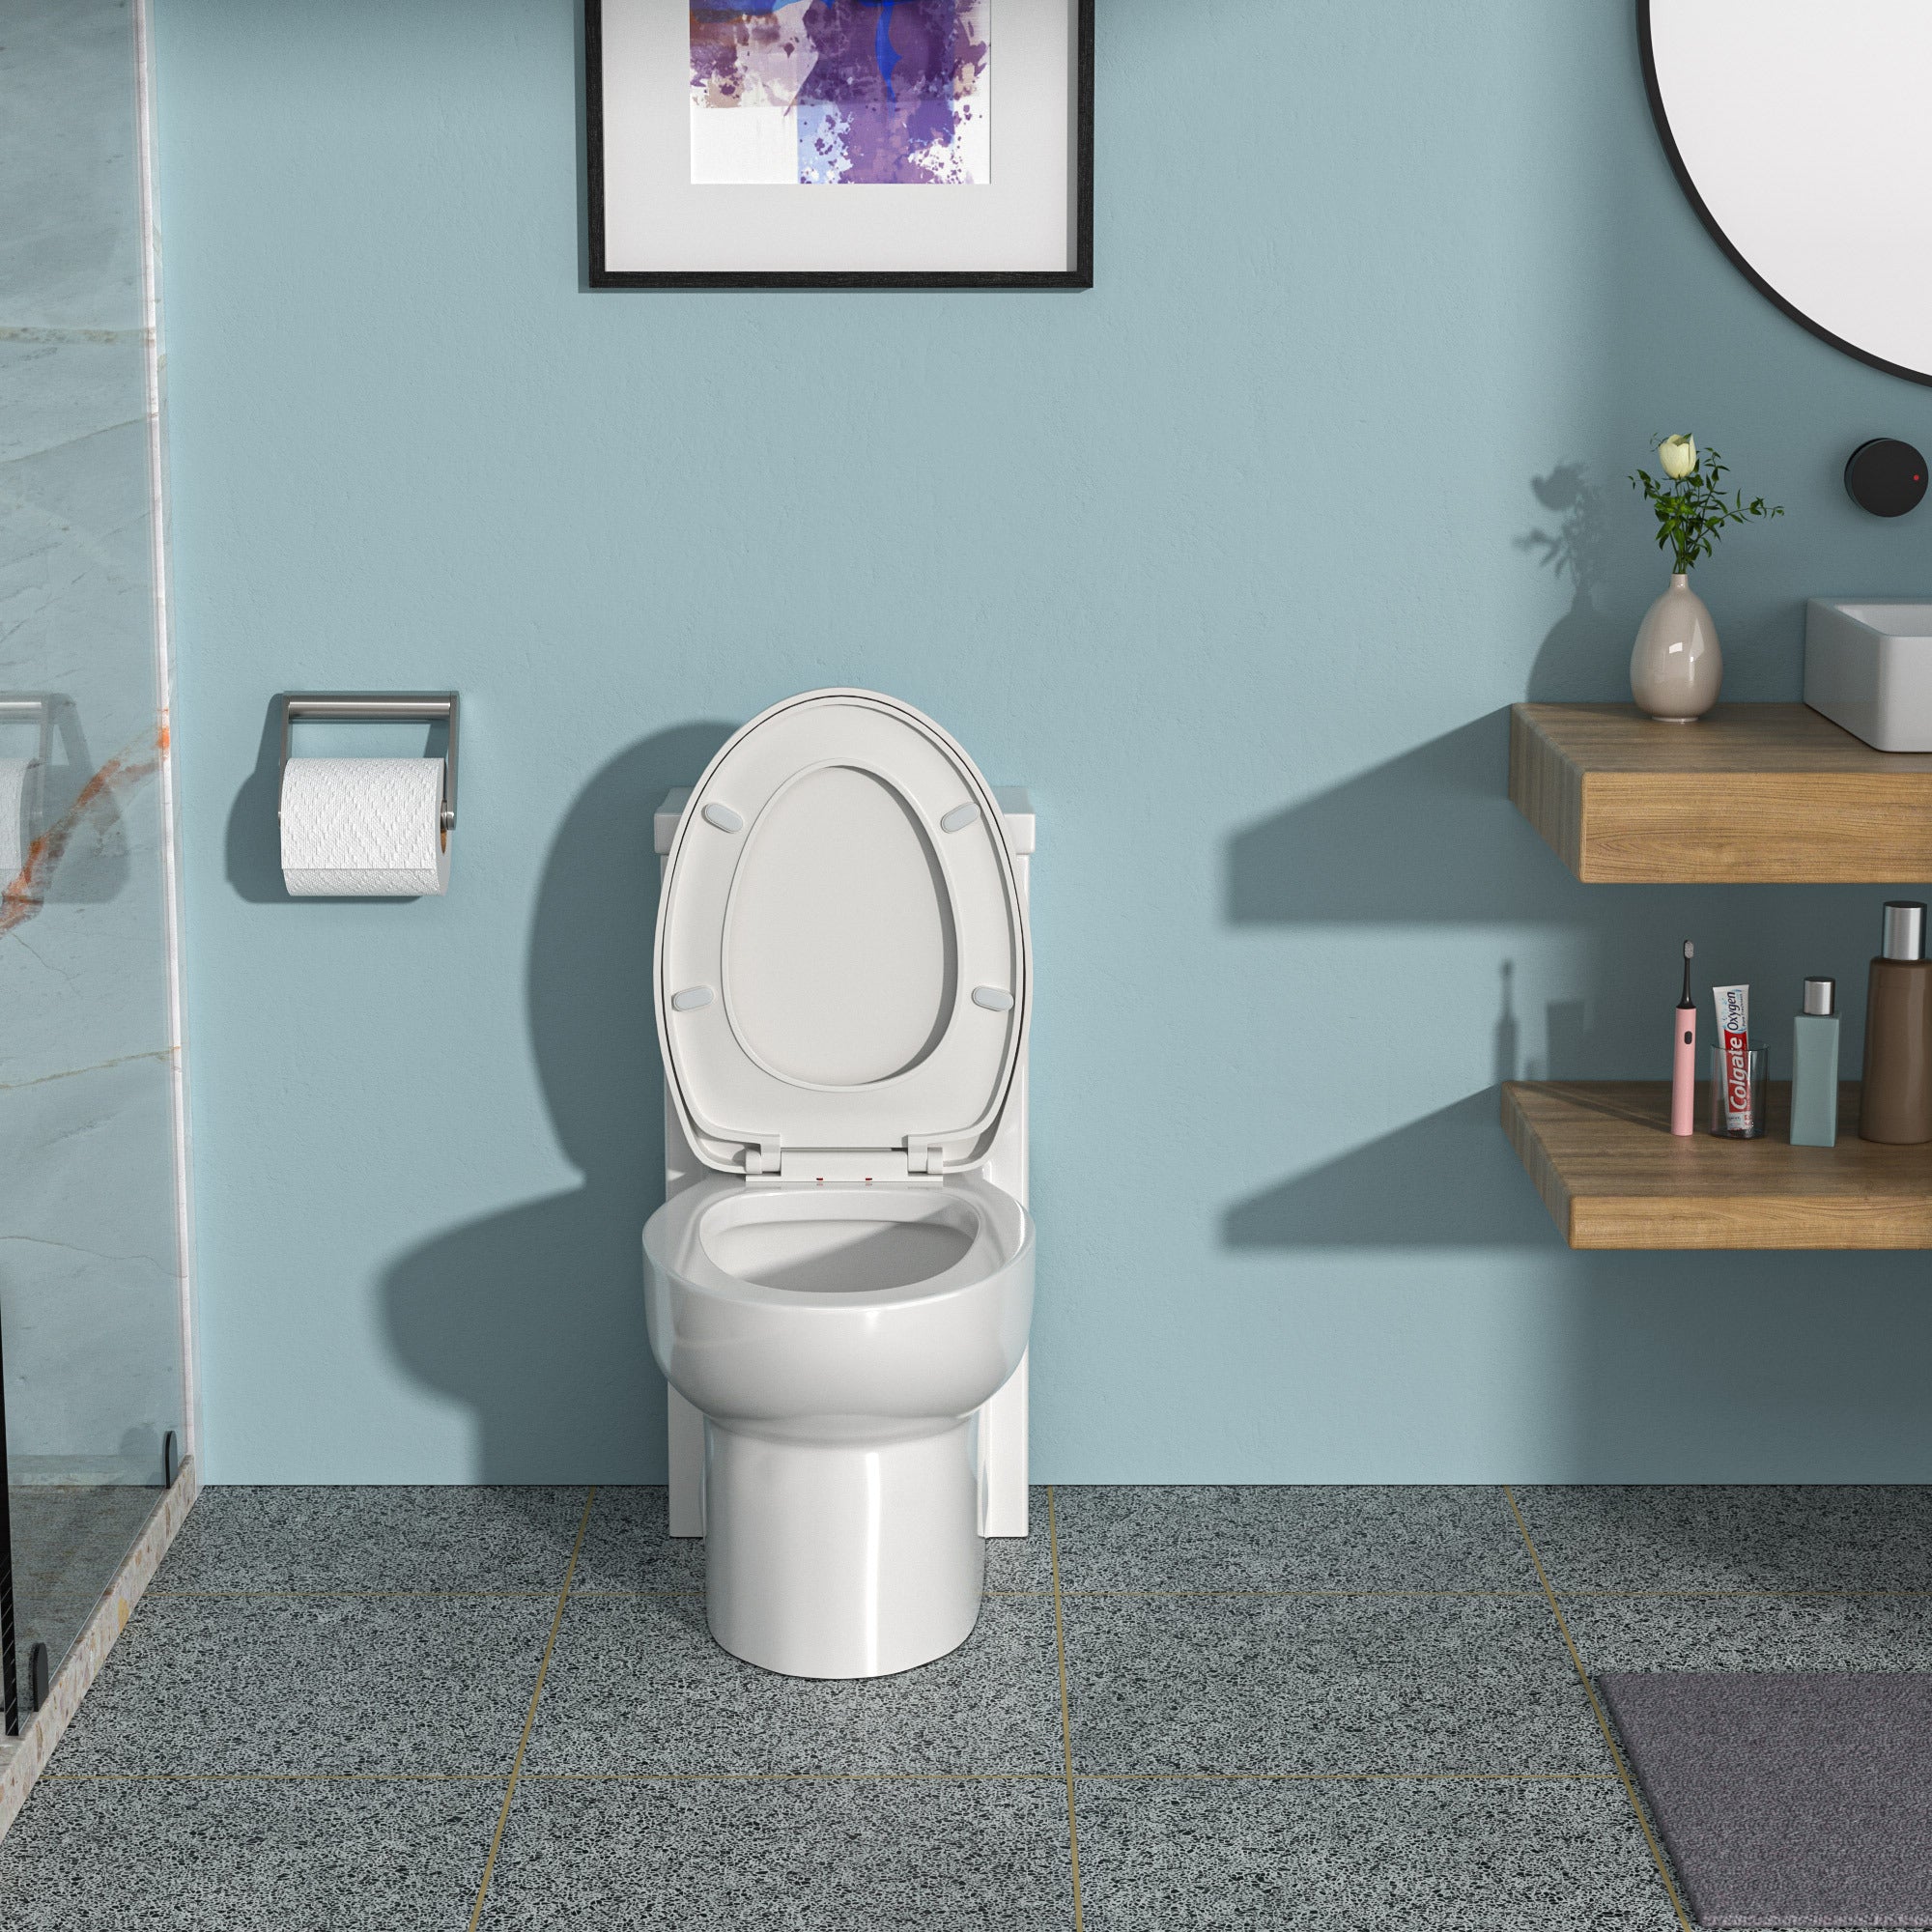 Ceramic One Piece Toilet Single Flush with Soft